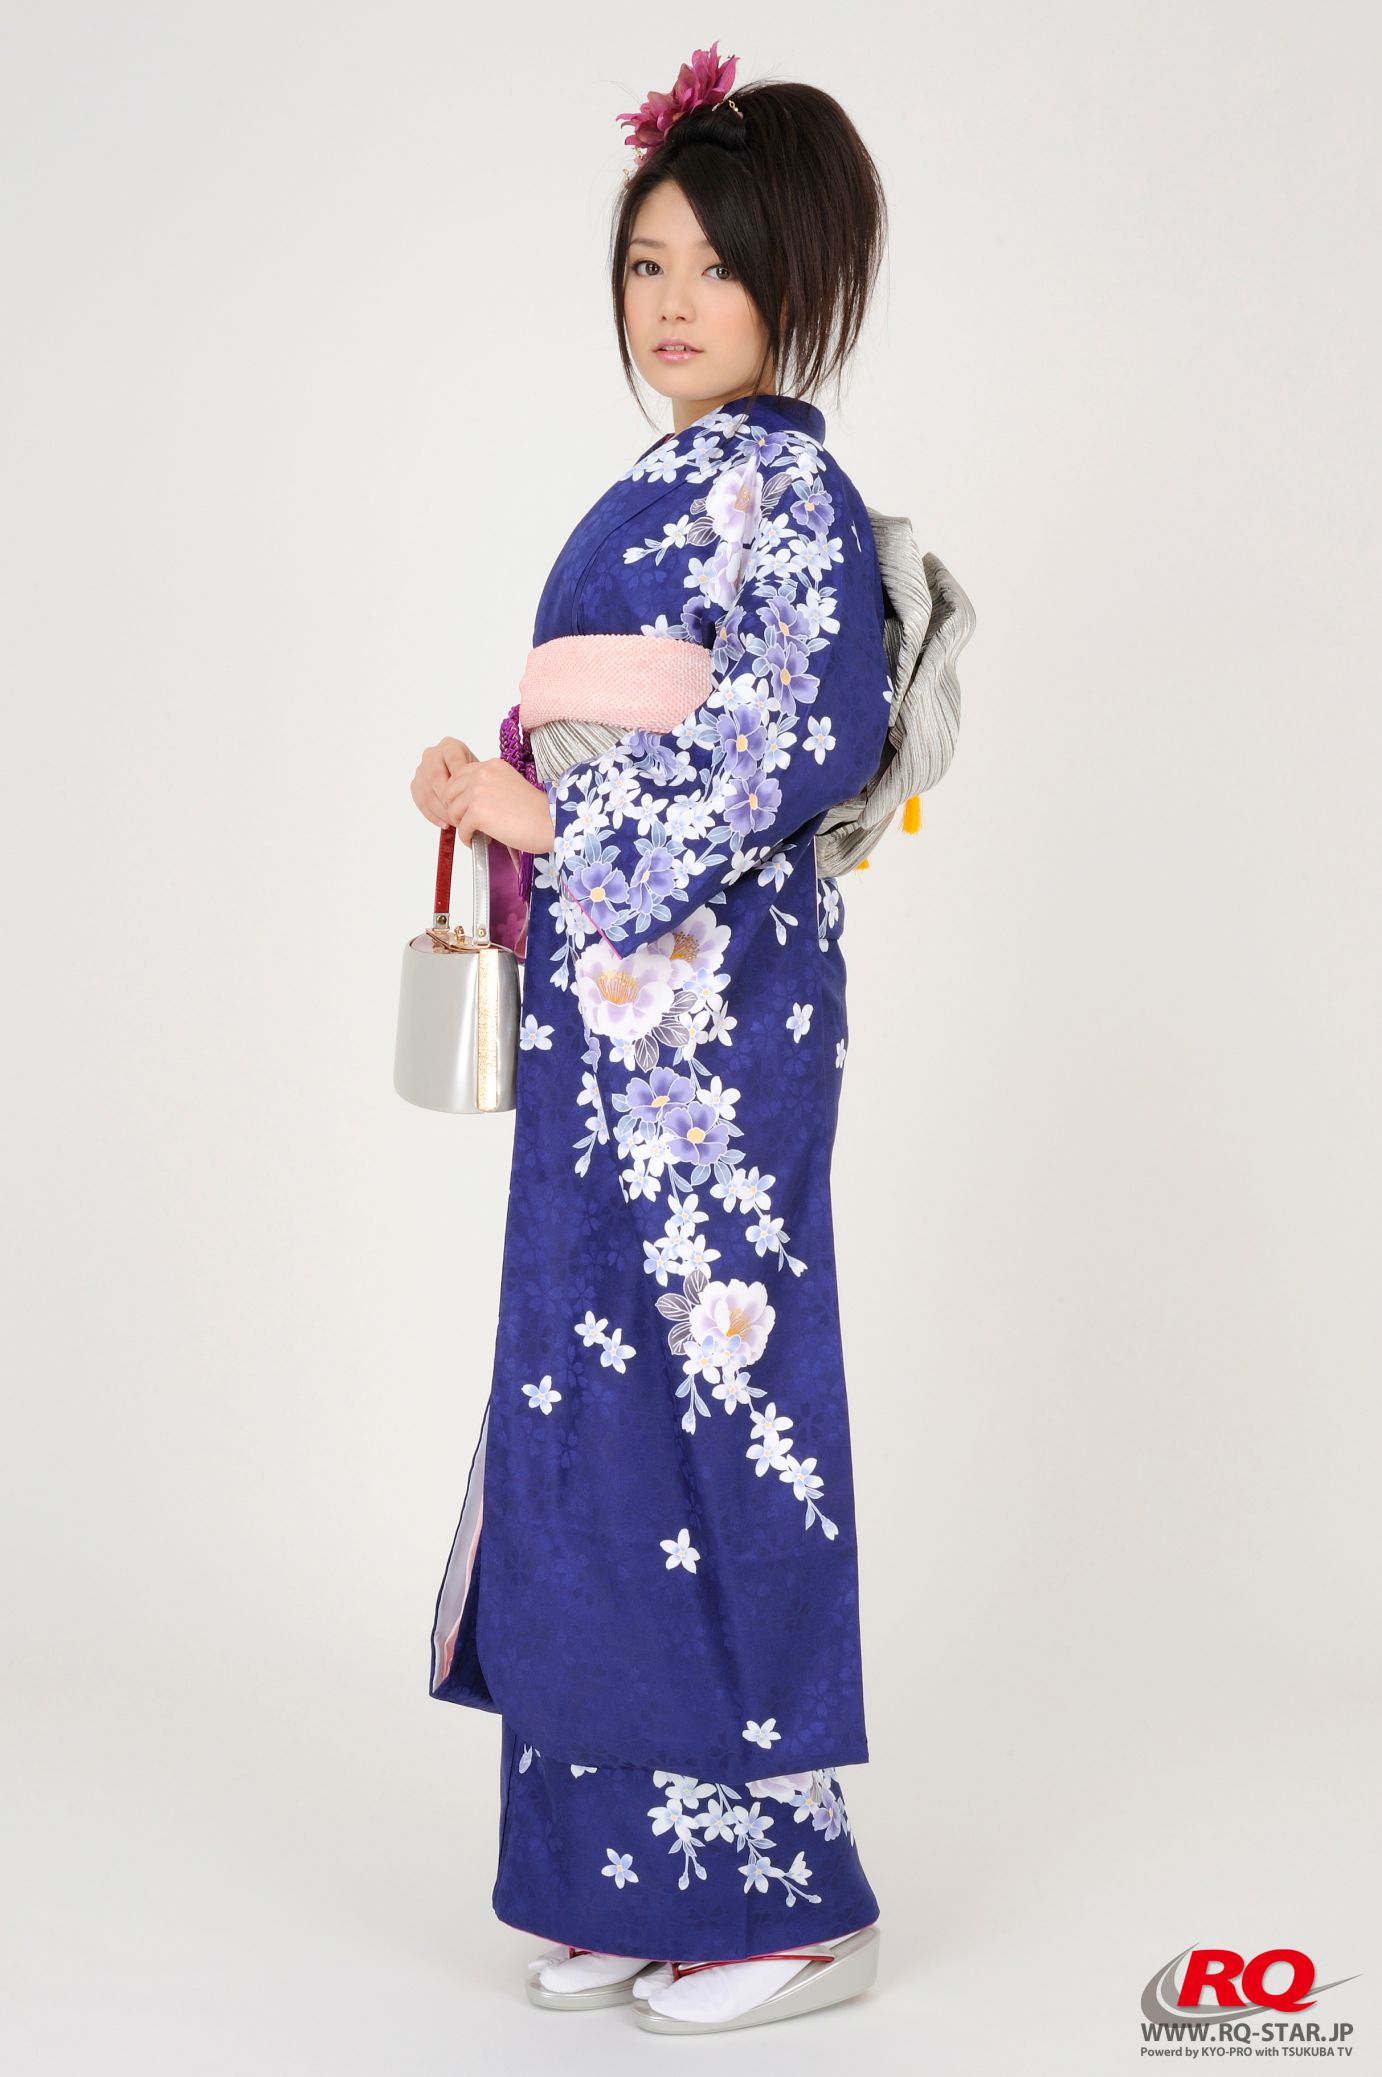 [RQ-STAR] NO.00068 古崎瞳 謹賀新年 Kimono – Happy New Year 和服系列6